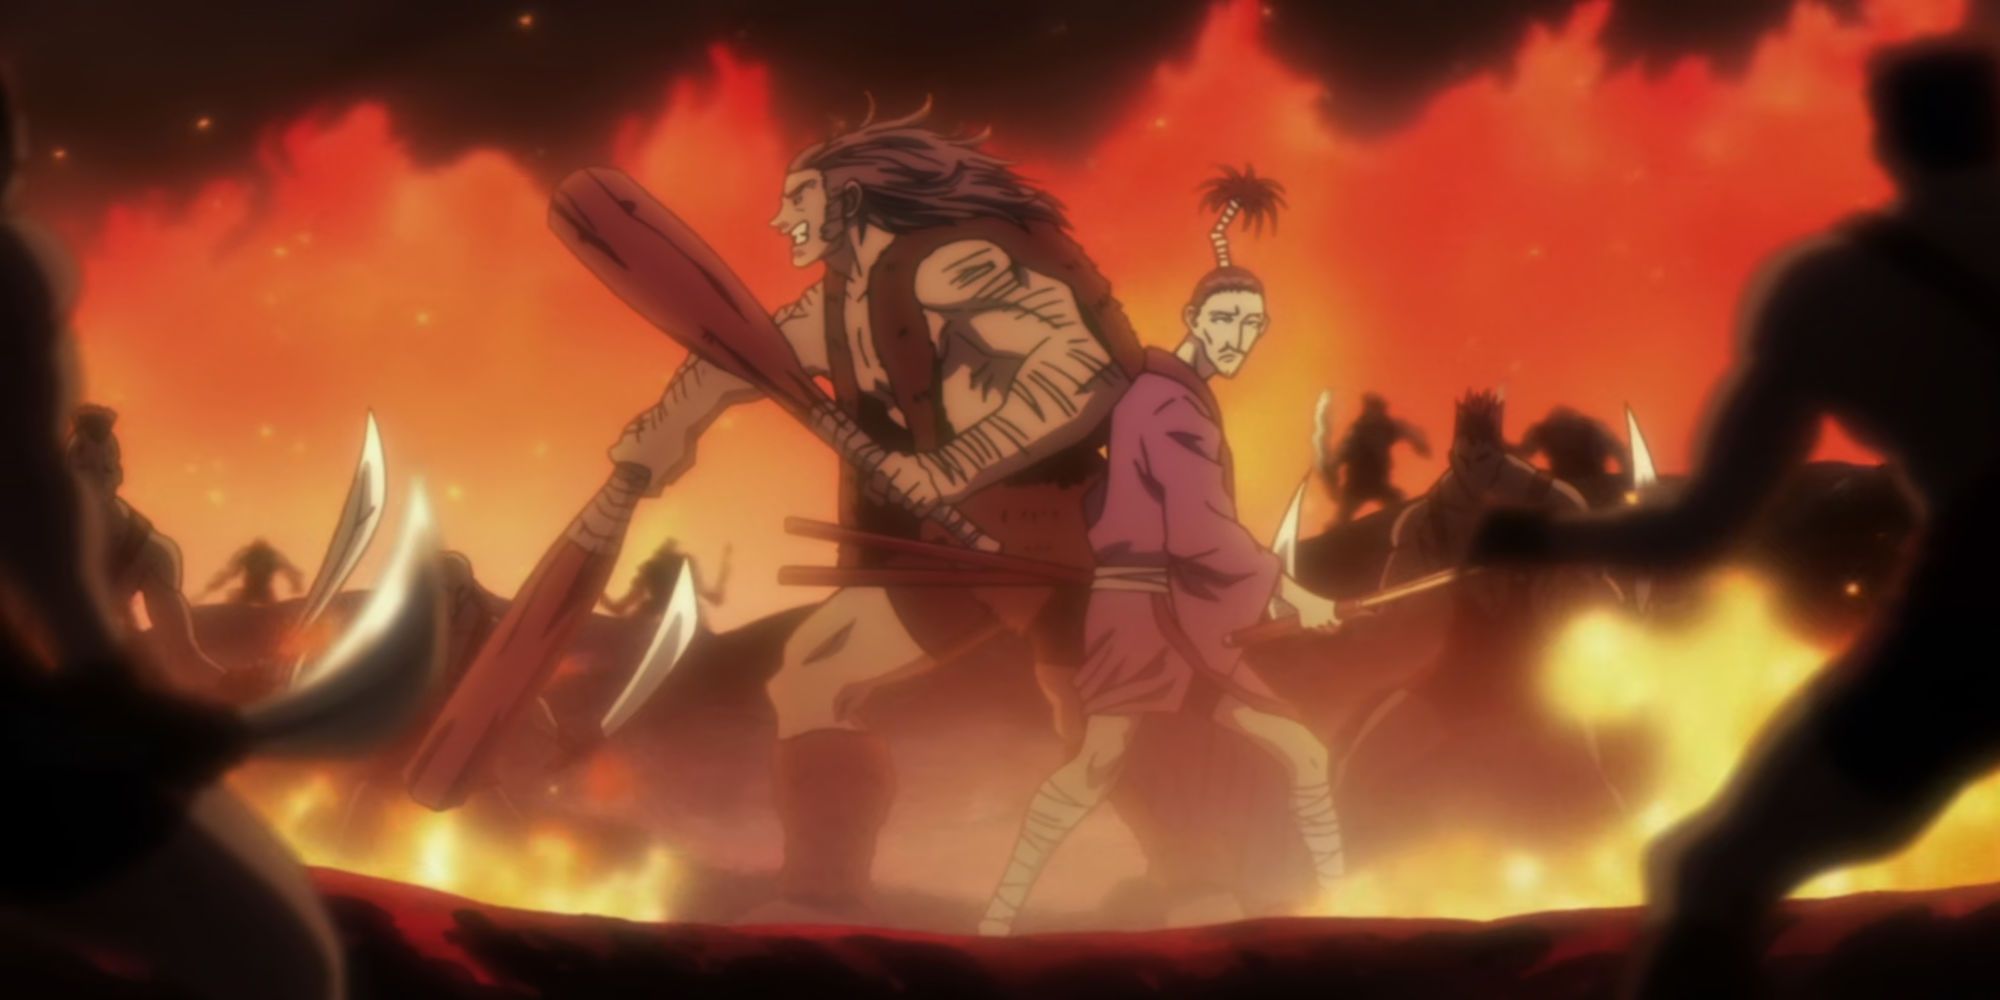 Uvogin and Nobunaga fighting side by side in Hunter x Hunter